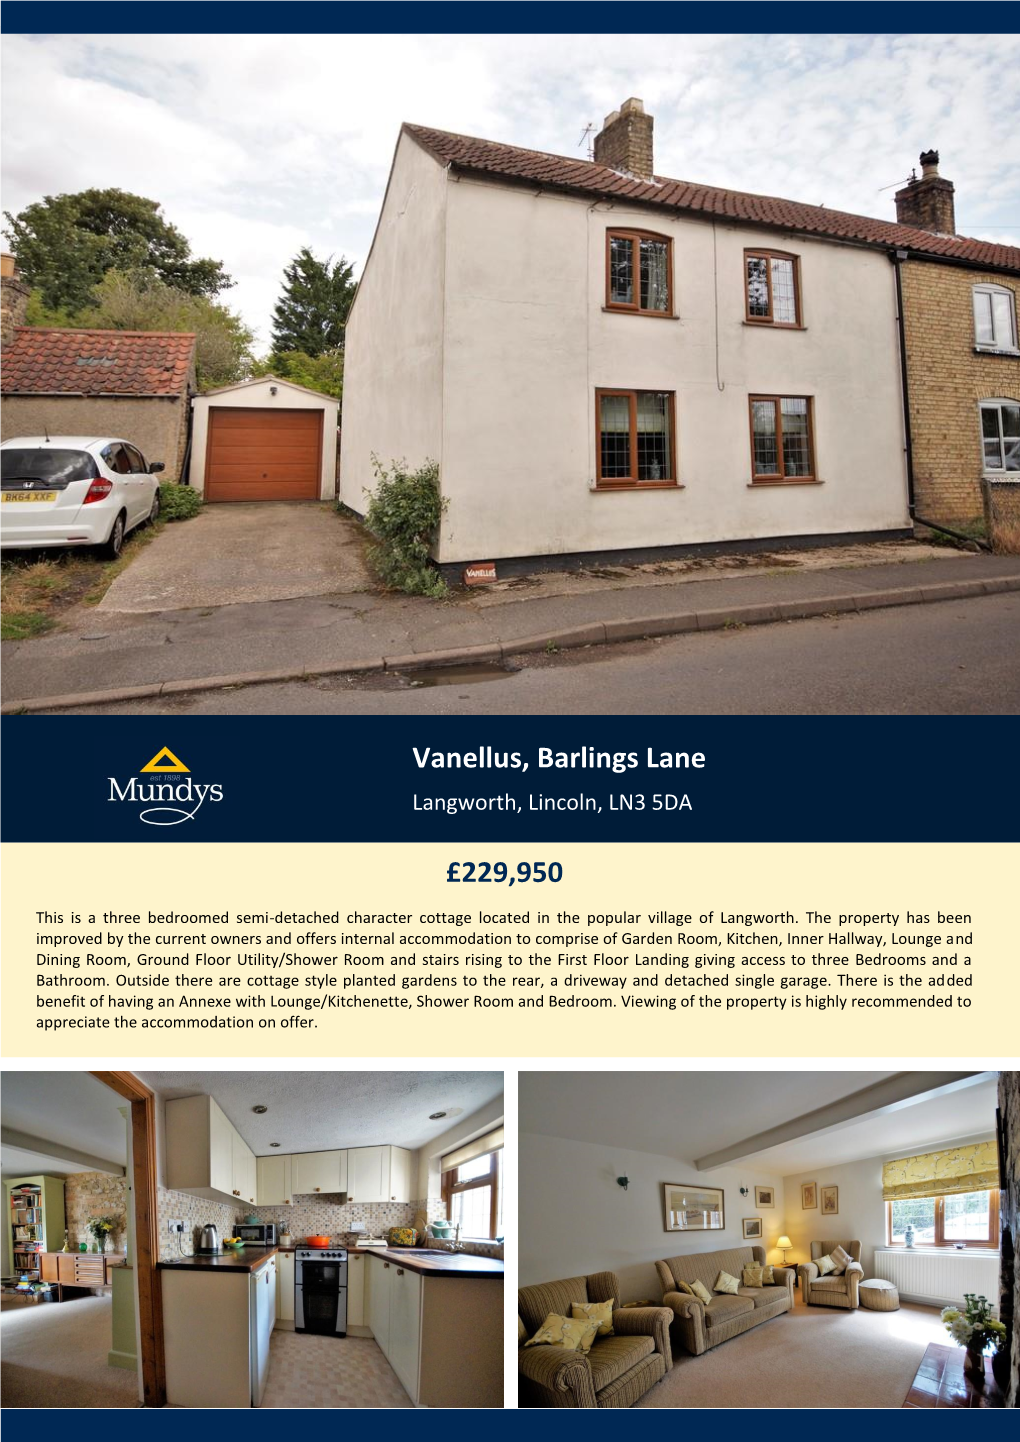 Vanellus, Barlings Lane £229,950